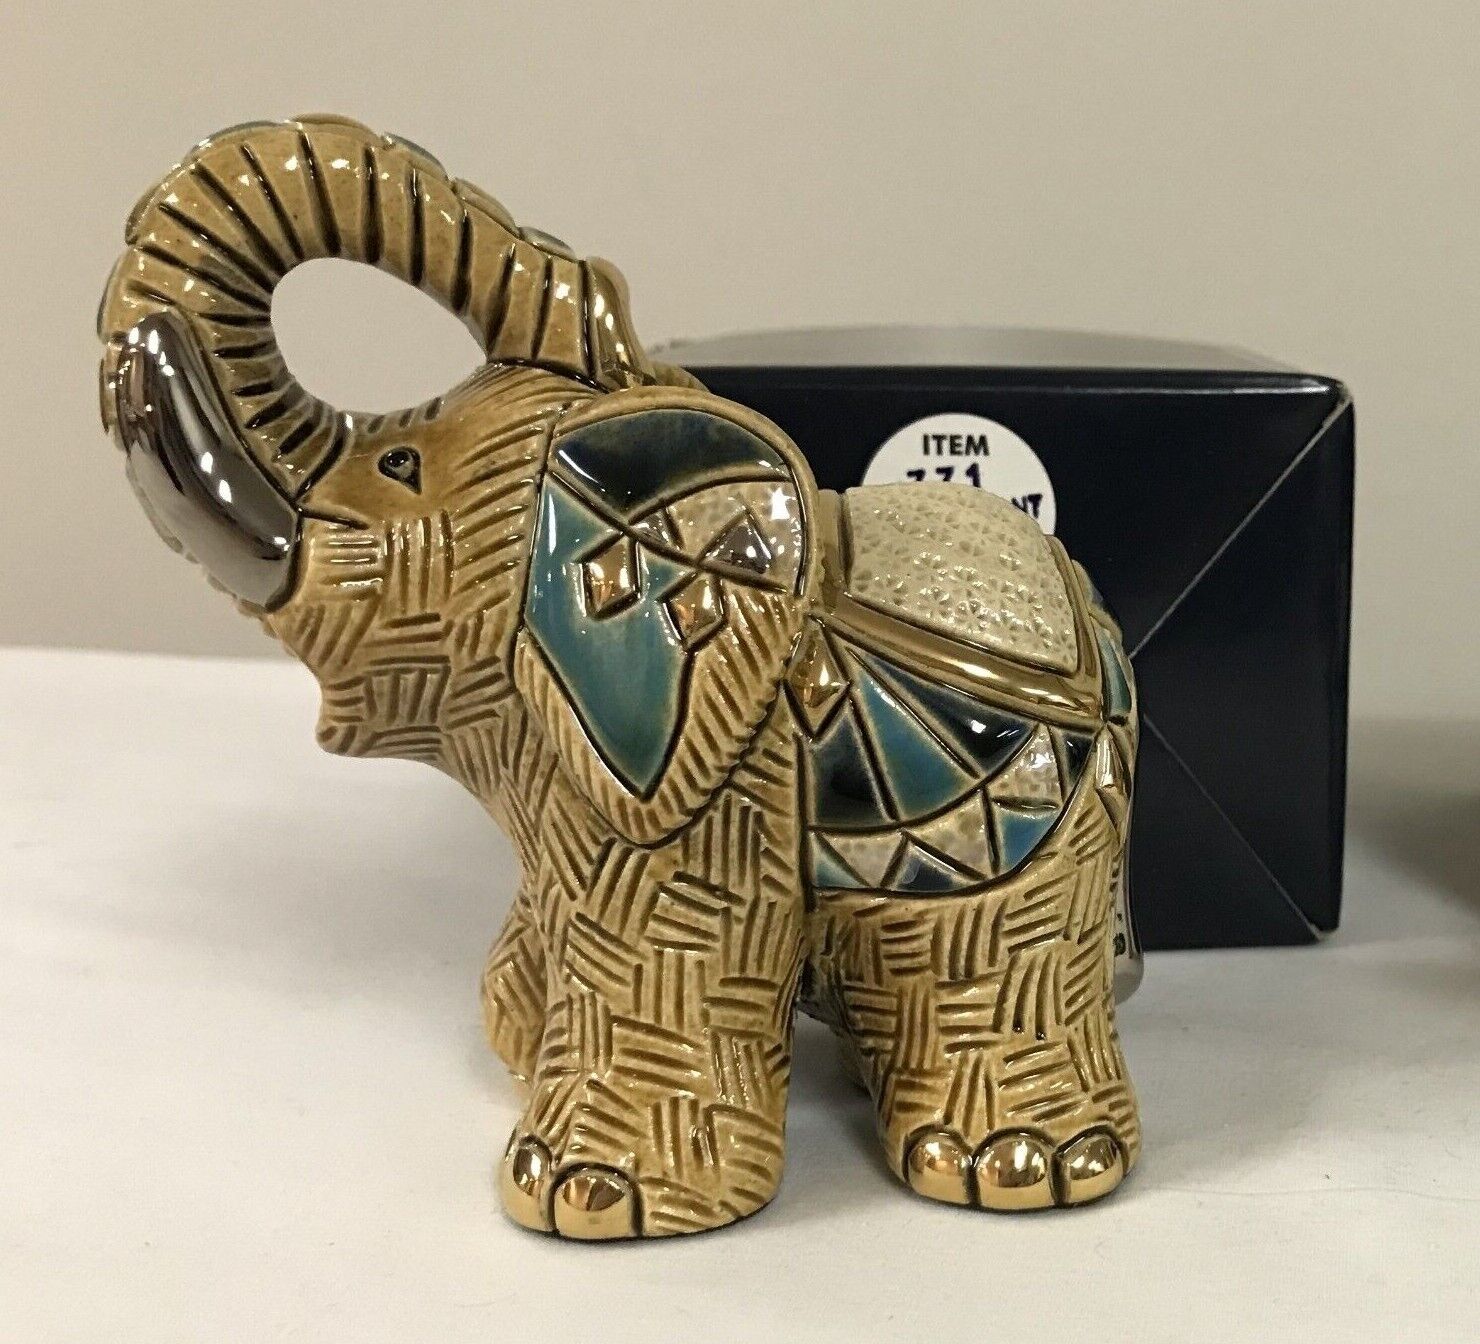 DeRosa Rinconada Figurines Elephant Bird Camel Cat Orca Horse $25-85, You Choose